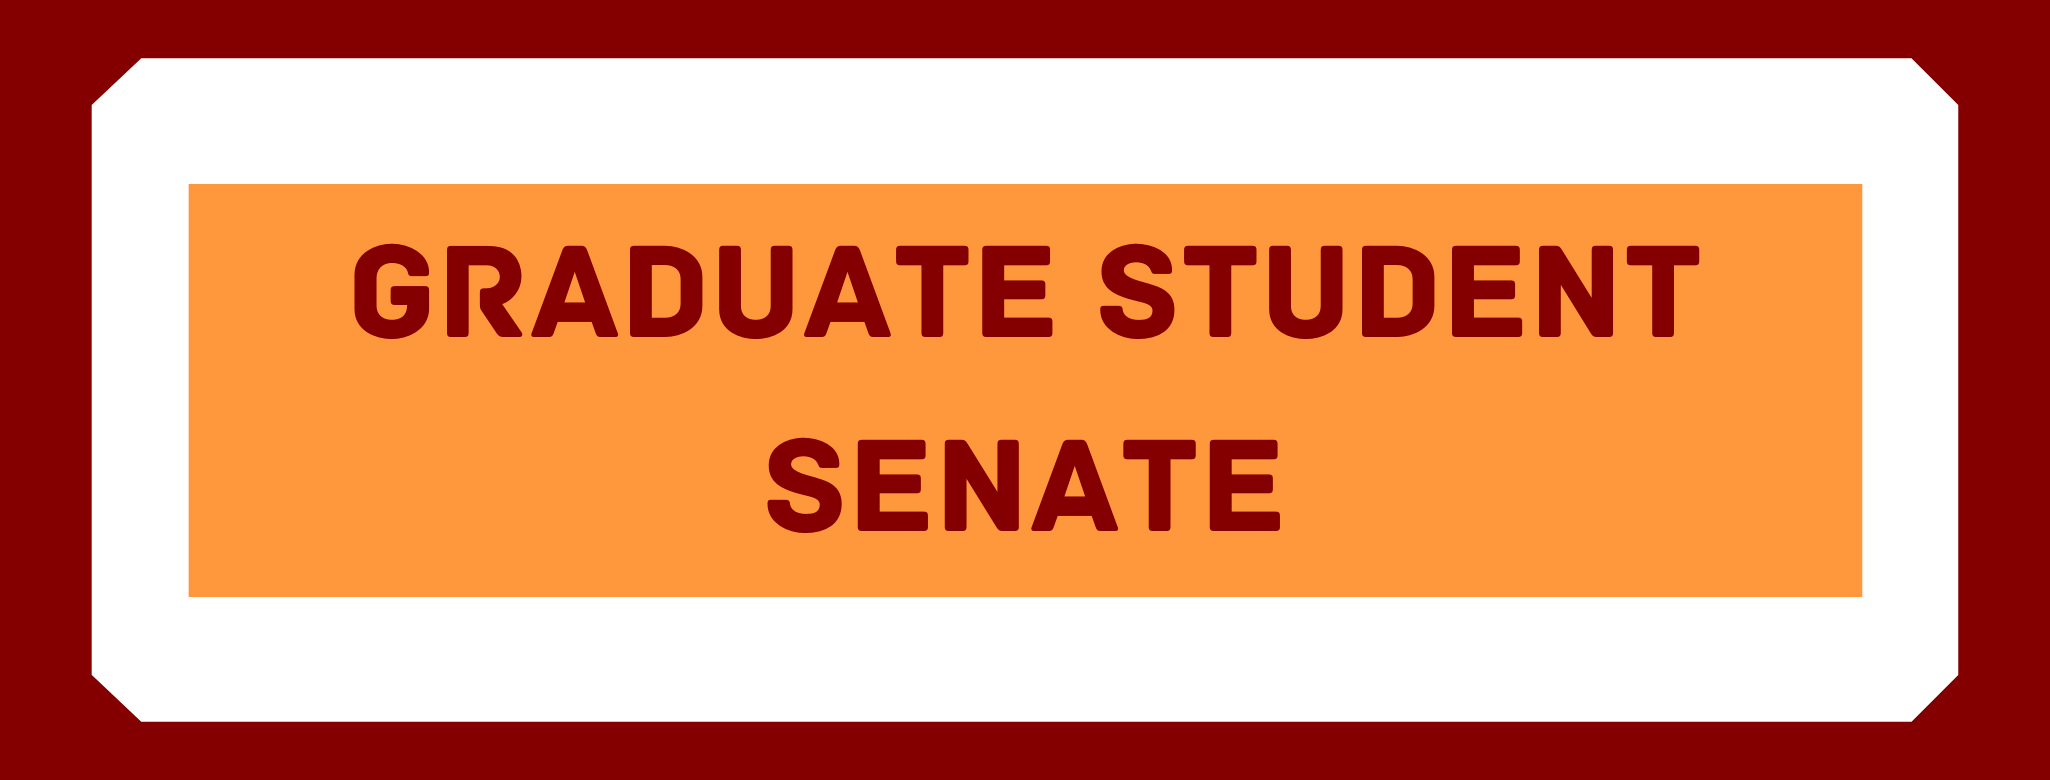 Graduate-Student-Senate-Header